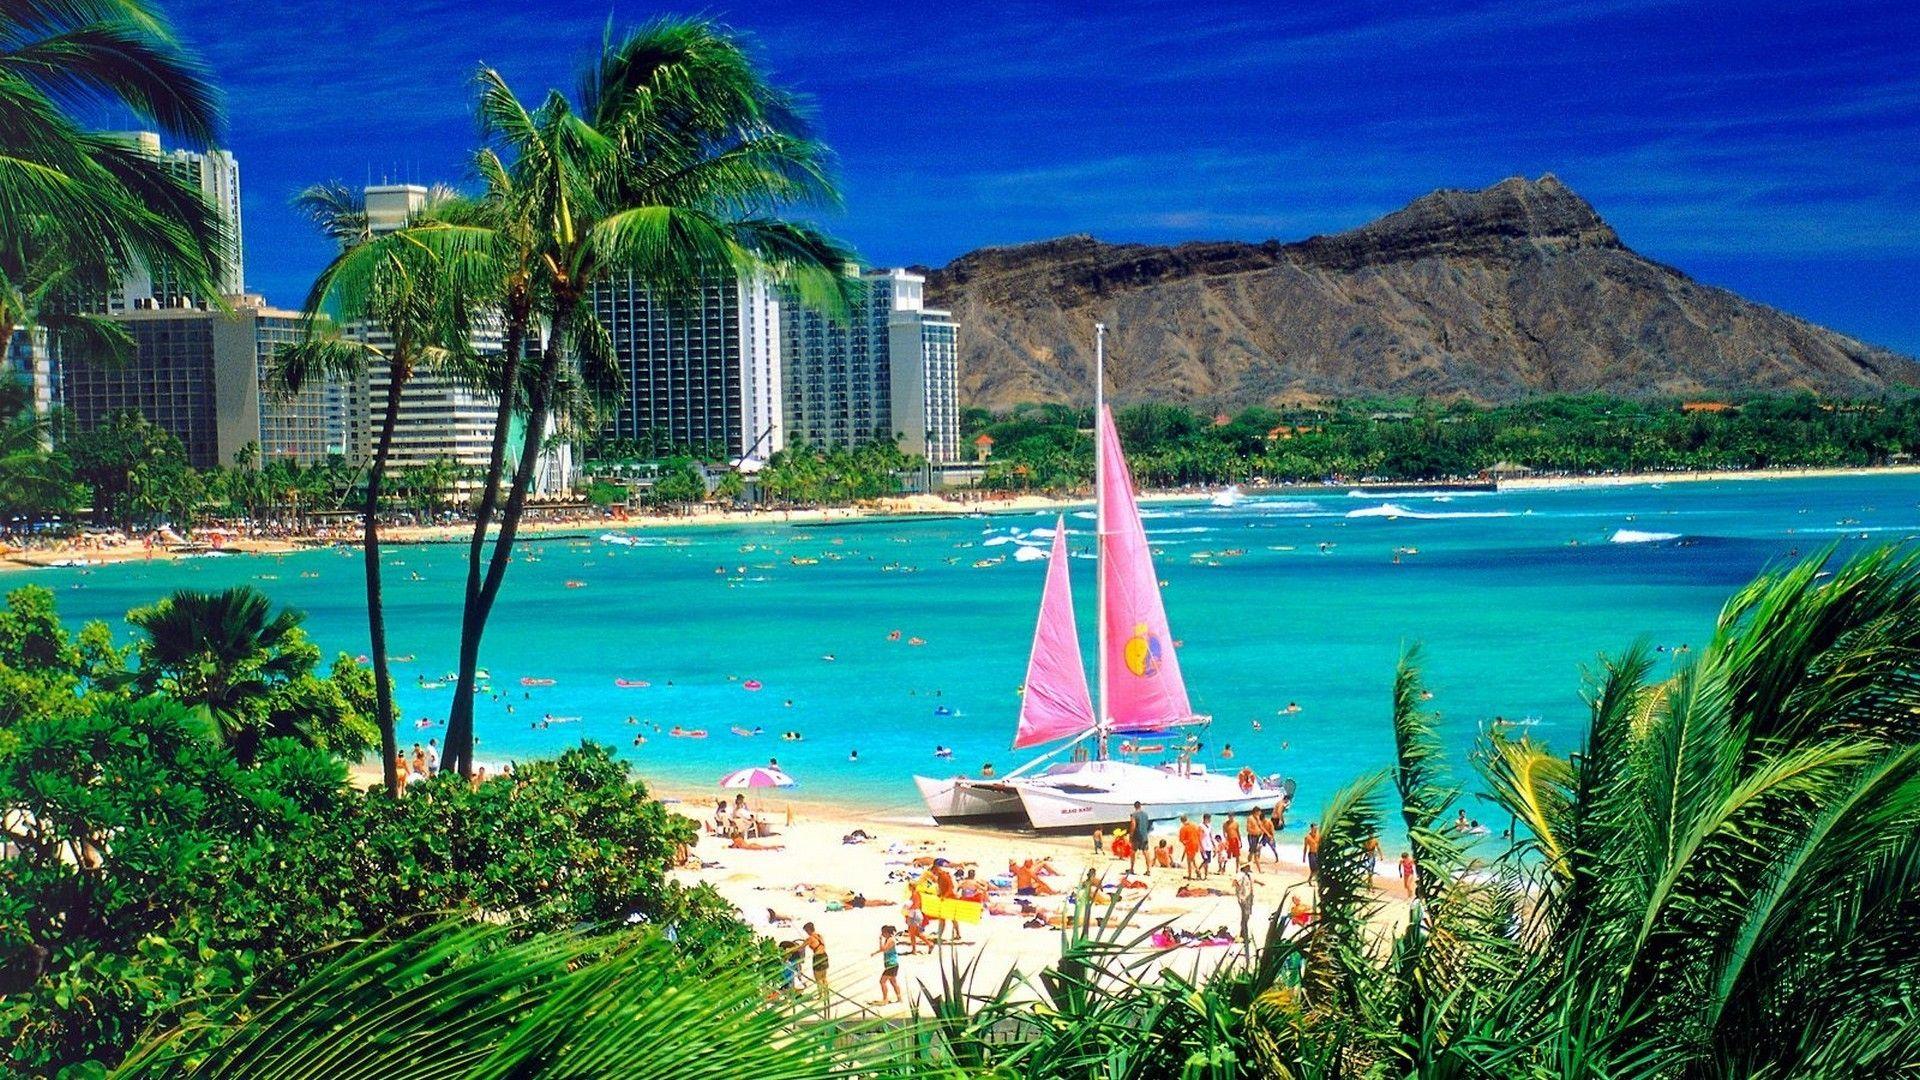 Beaches: Hawaii Oahu Wallpaper Image Nature for HD 16:9 High